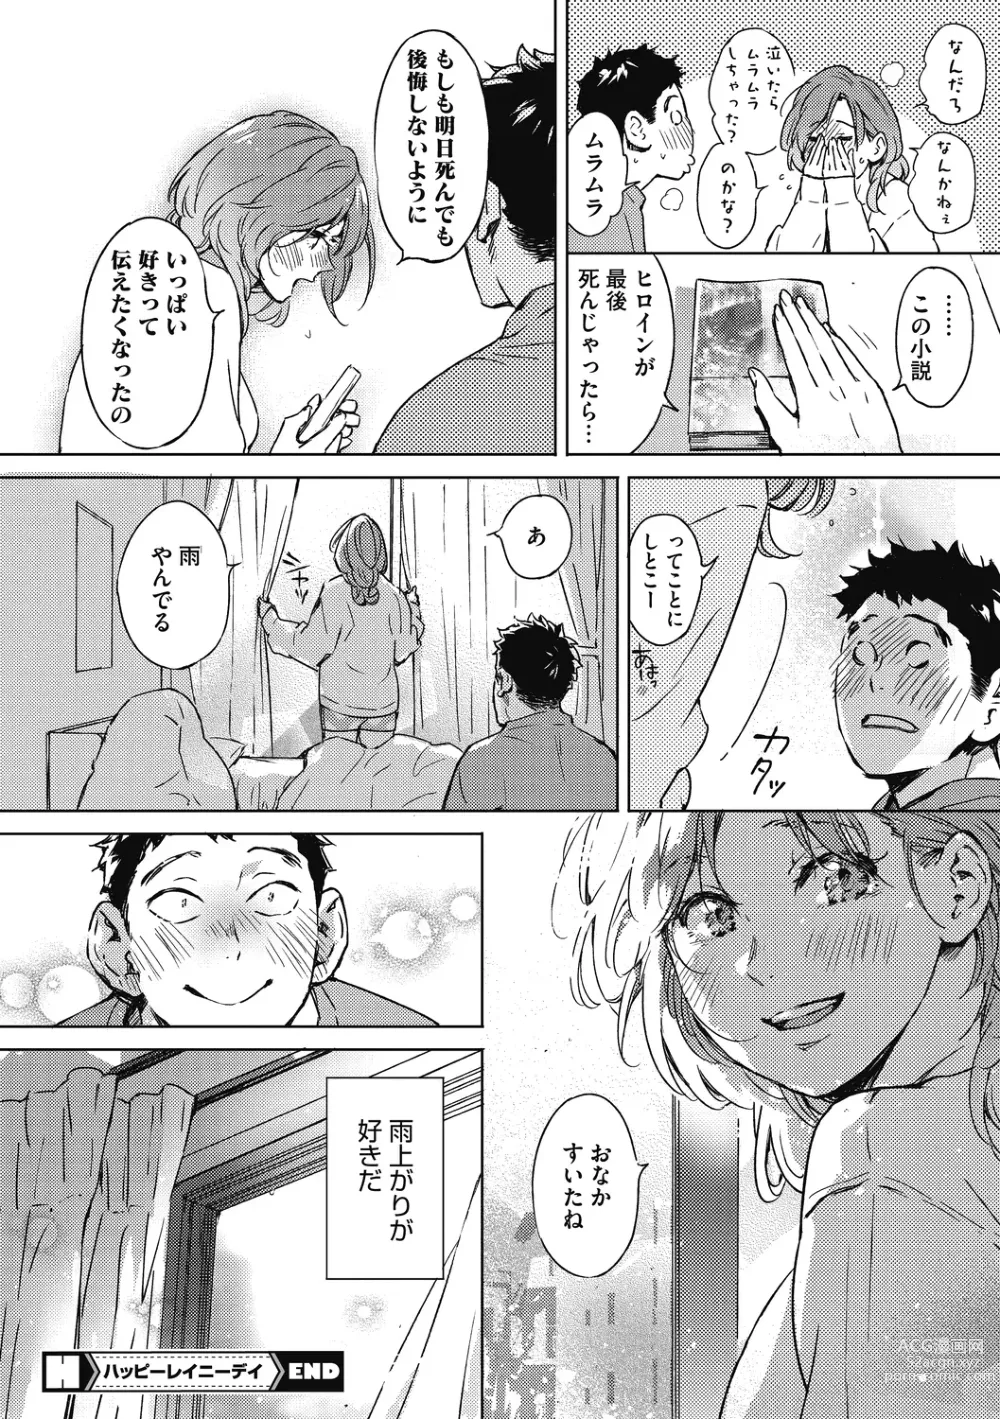 Page 208 of manga Barairo ni Somare - Feel so PINK!